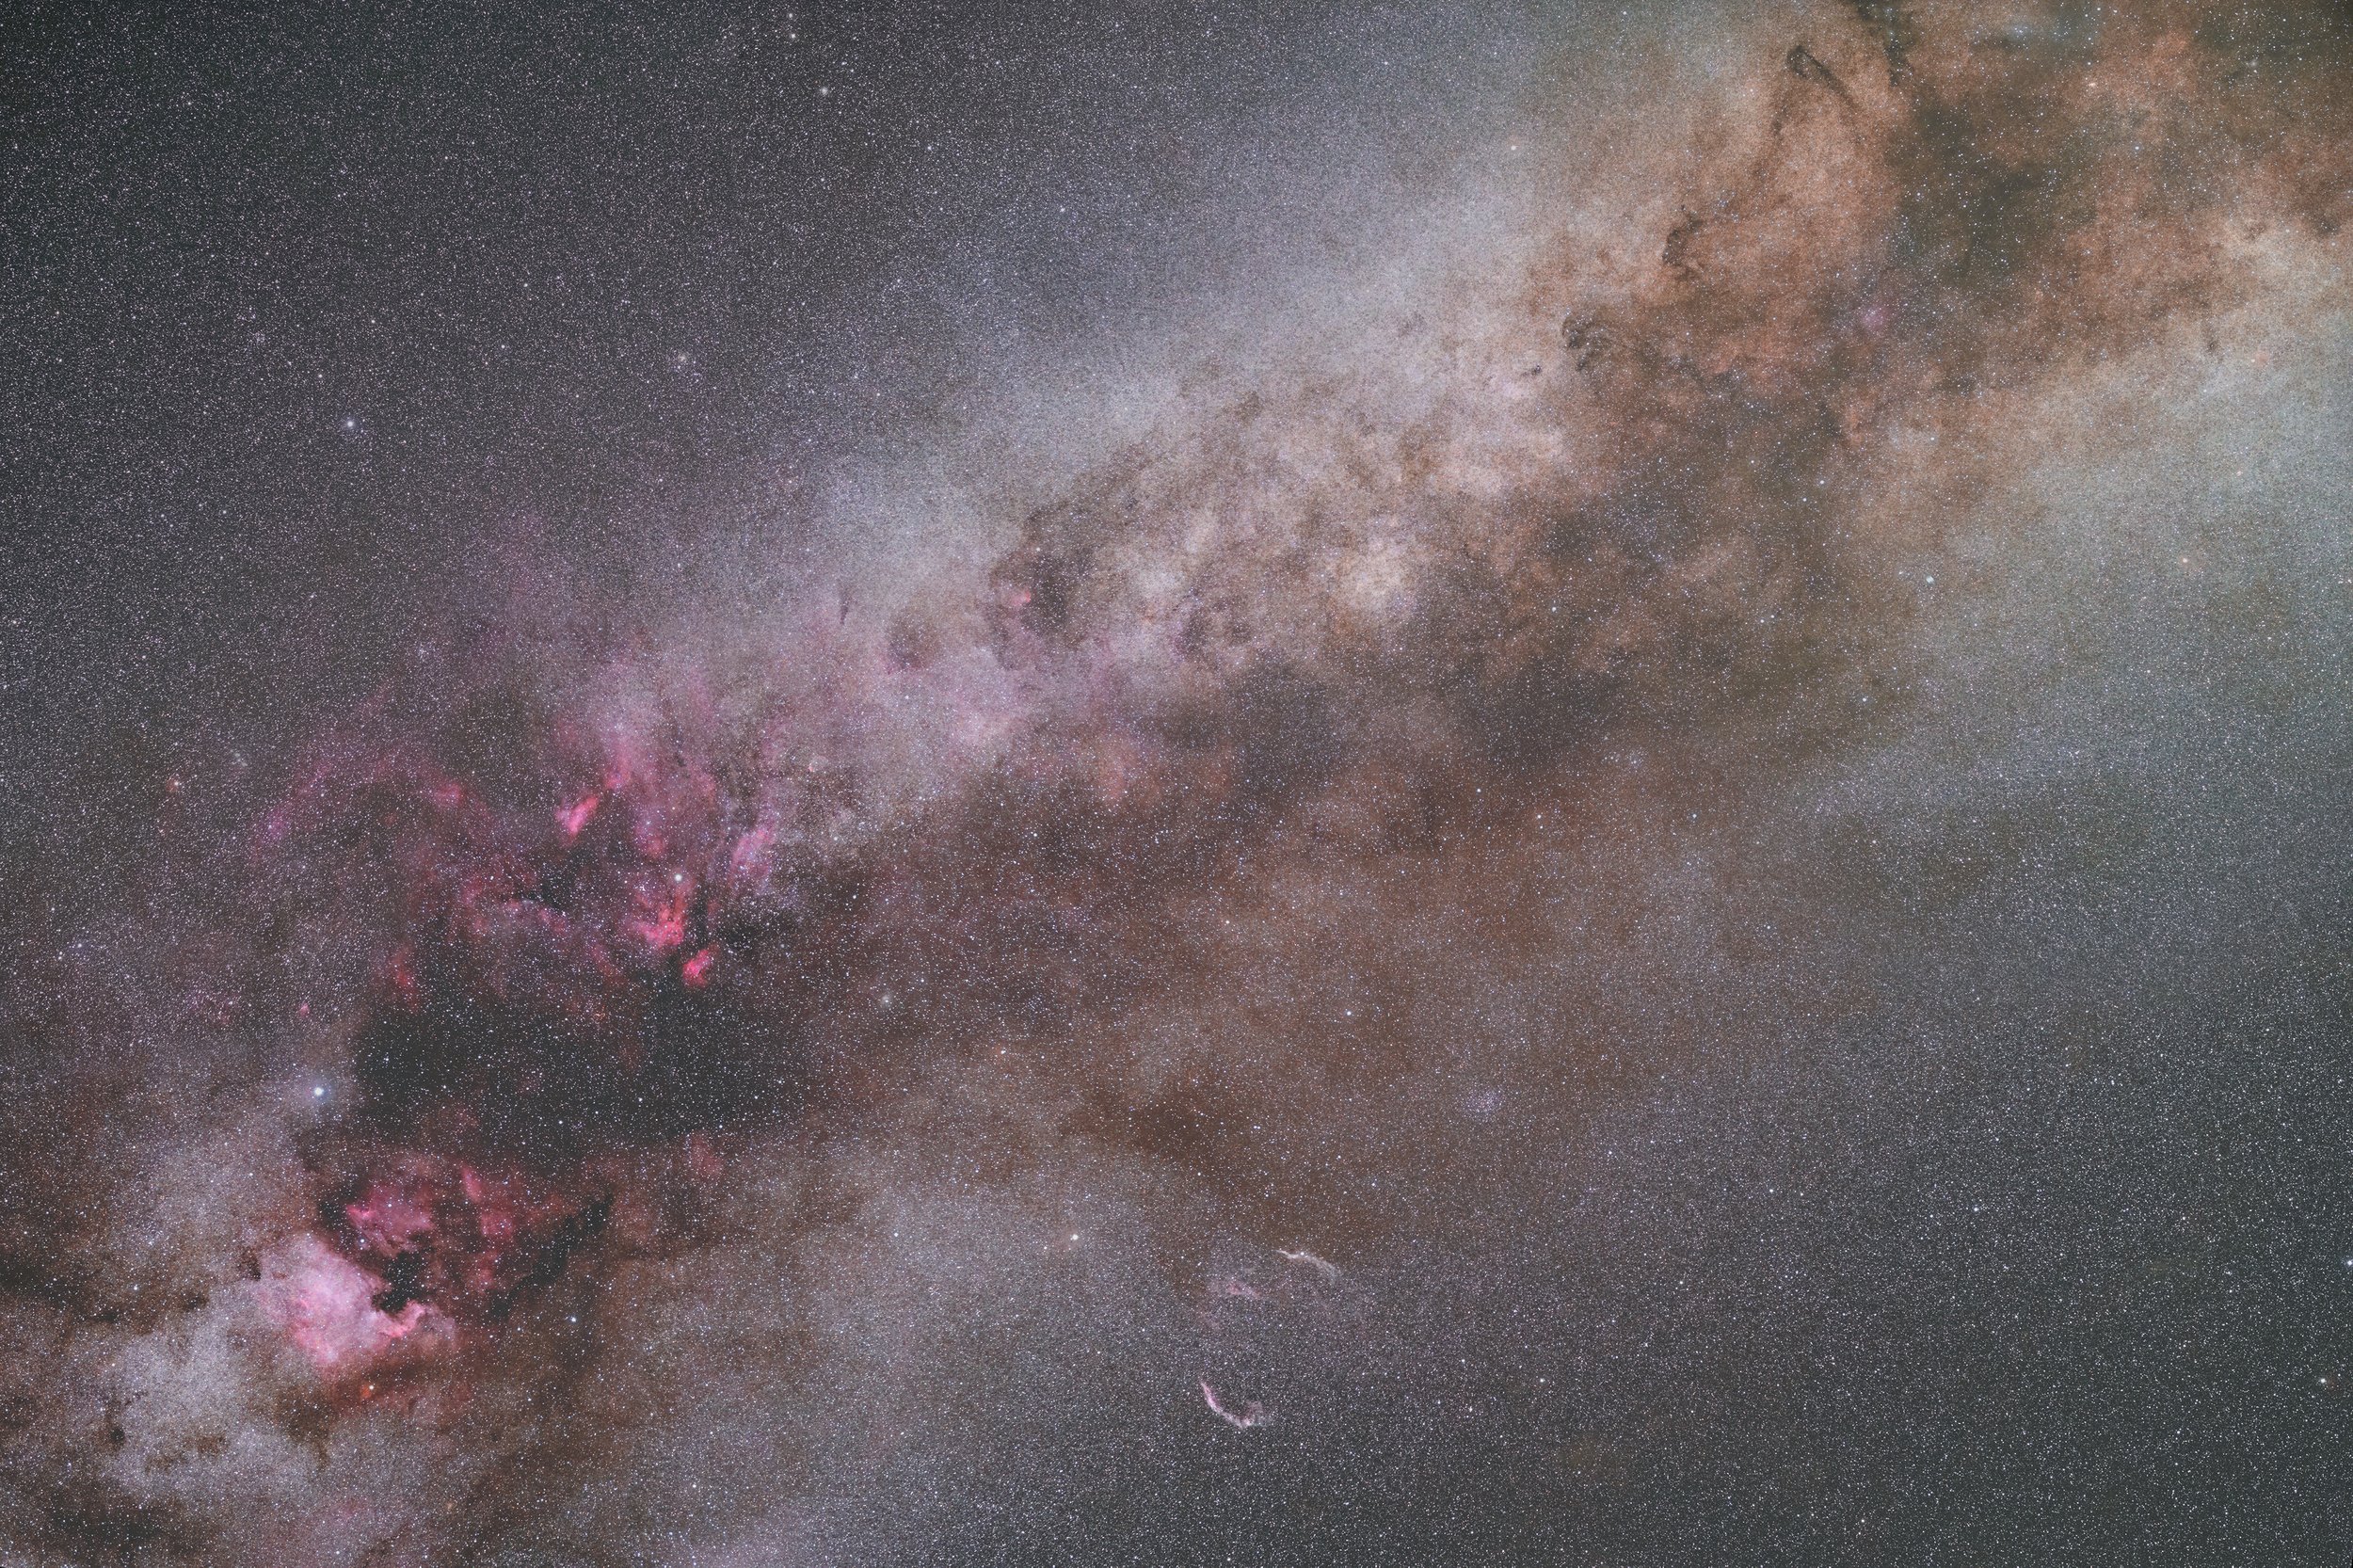 Cygnus Constellation from Spruce Knob, WV